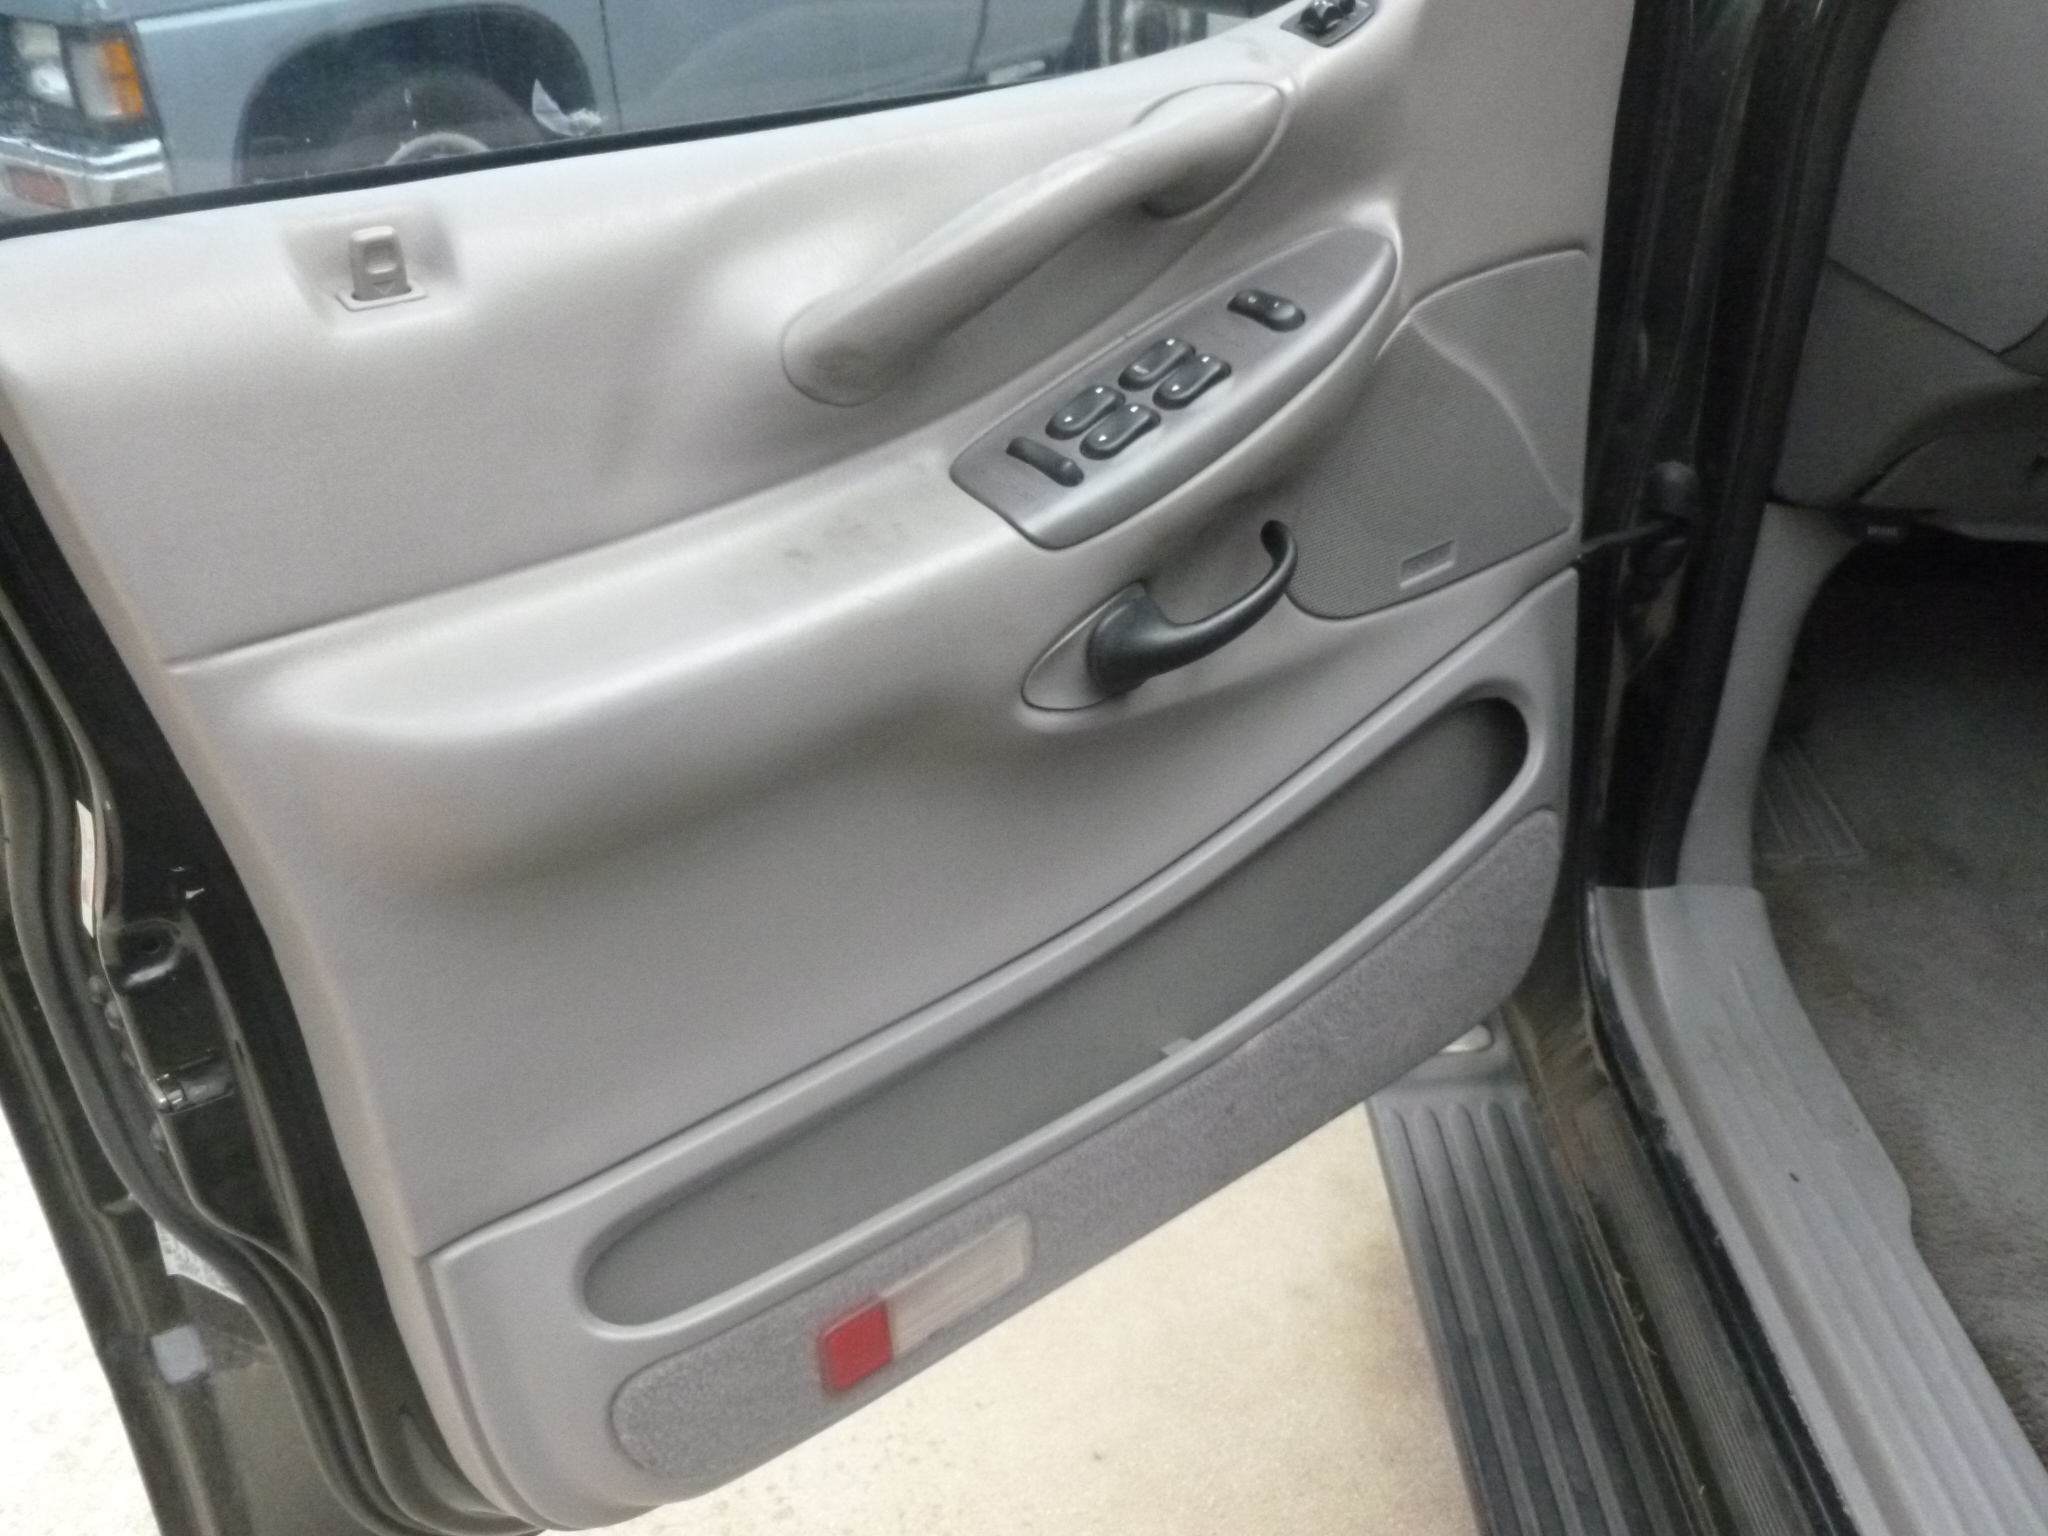 1998 silveraado doors handle all kit gray interior